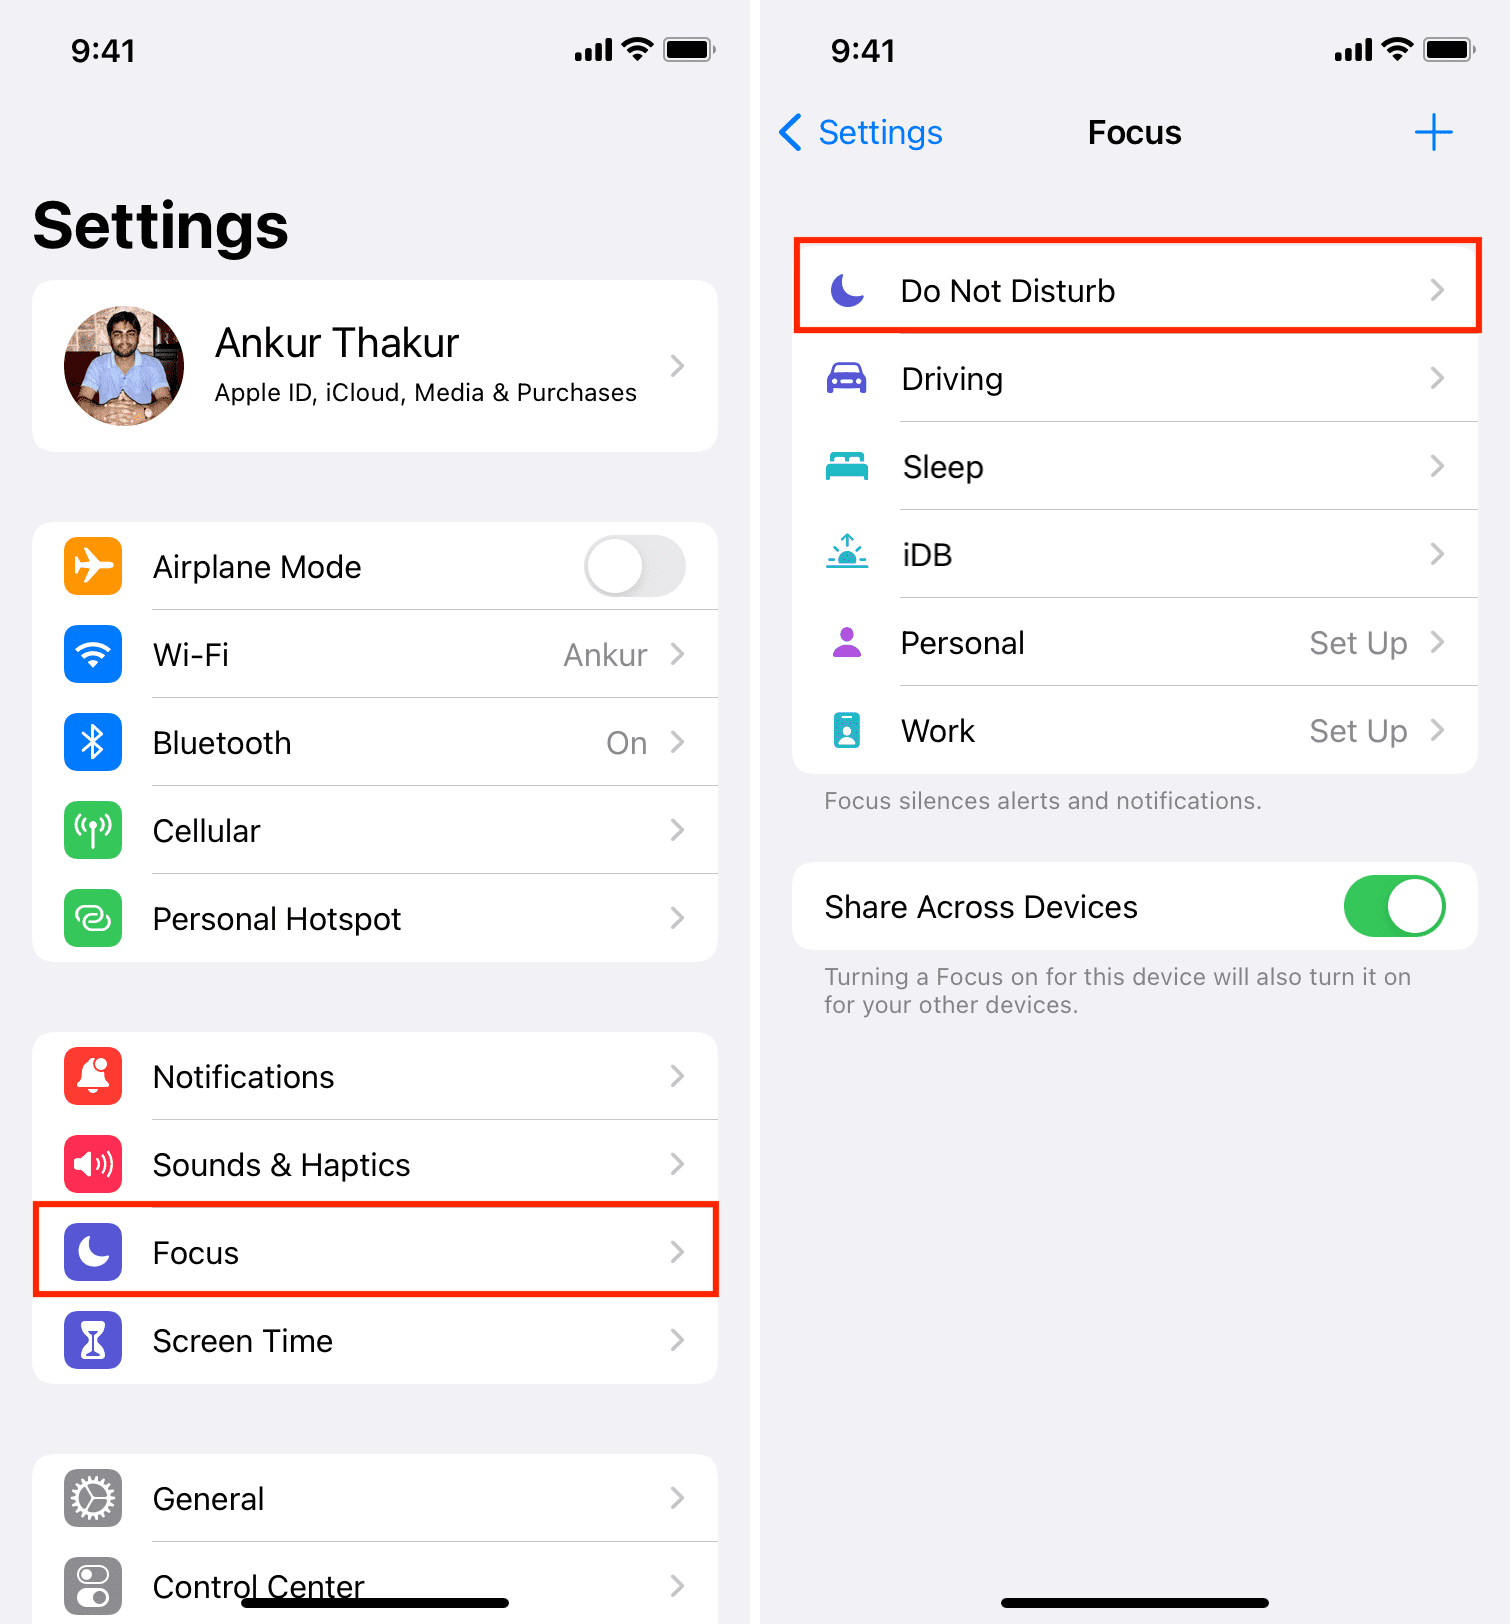 Do Not Disturb in iPhone Focus settings